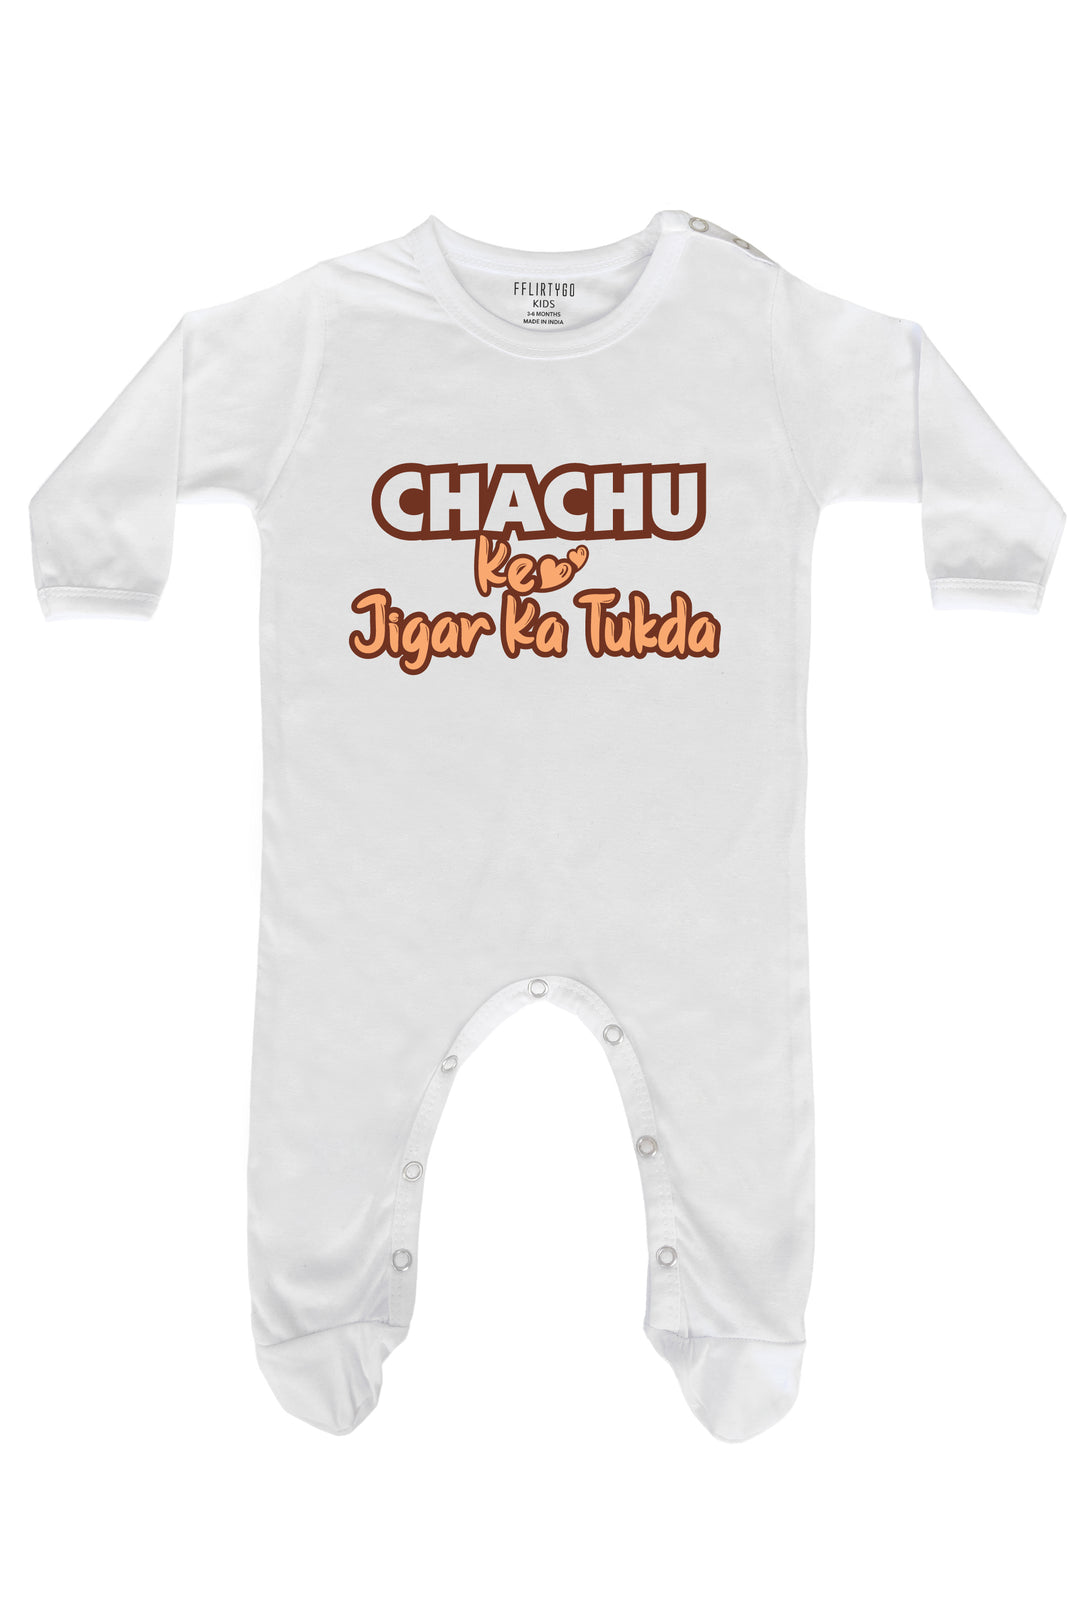 Chachu Ke Jigar Ka Tukda Baby Romper | Onesies